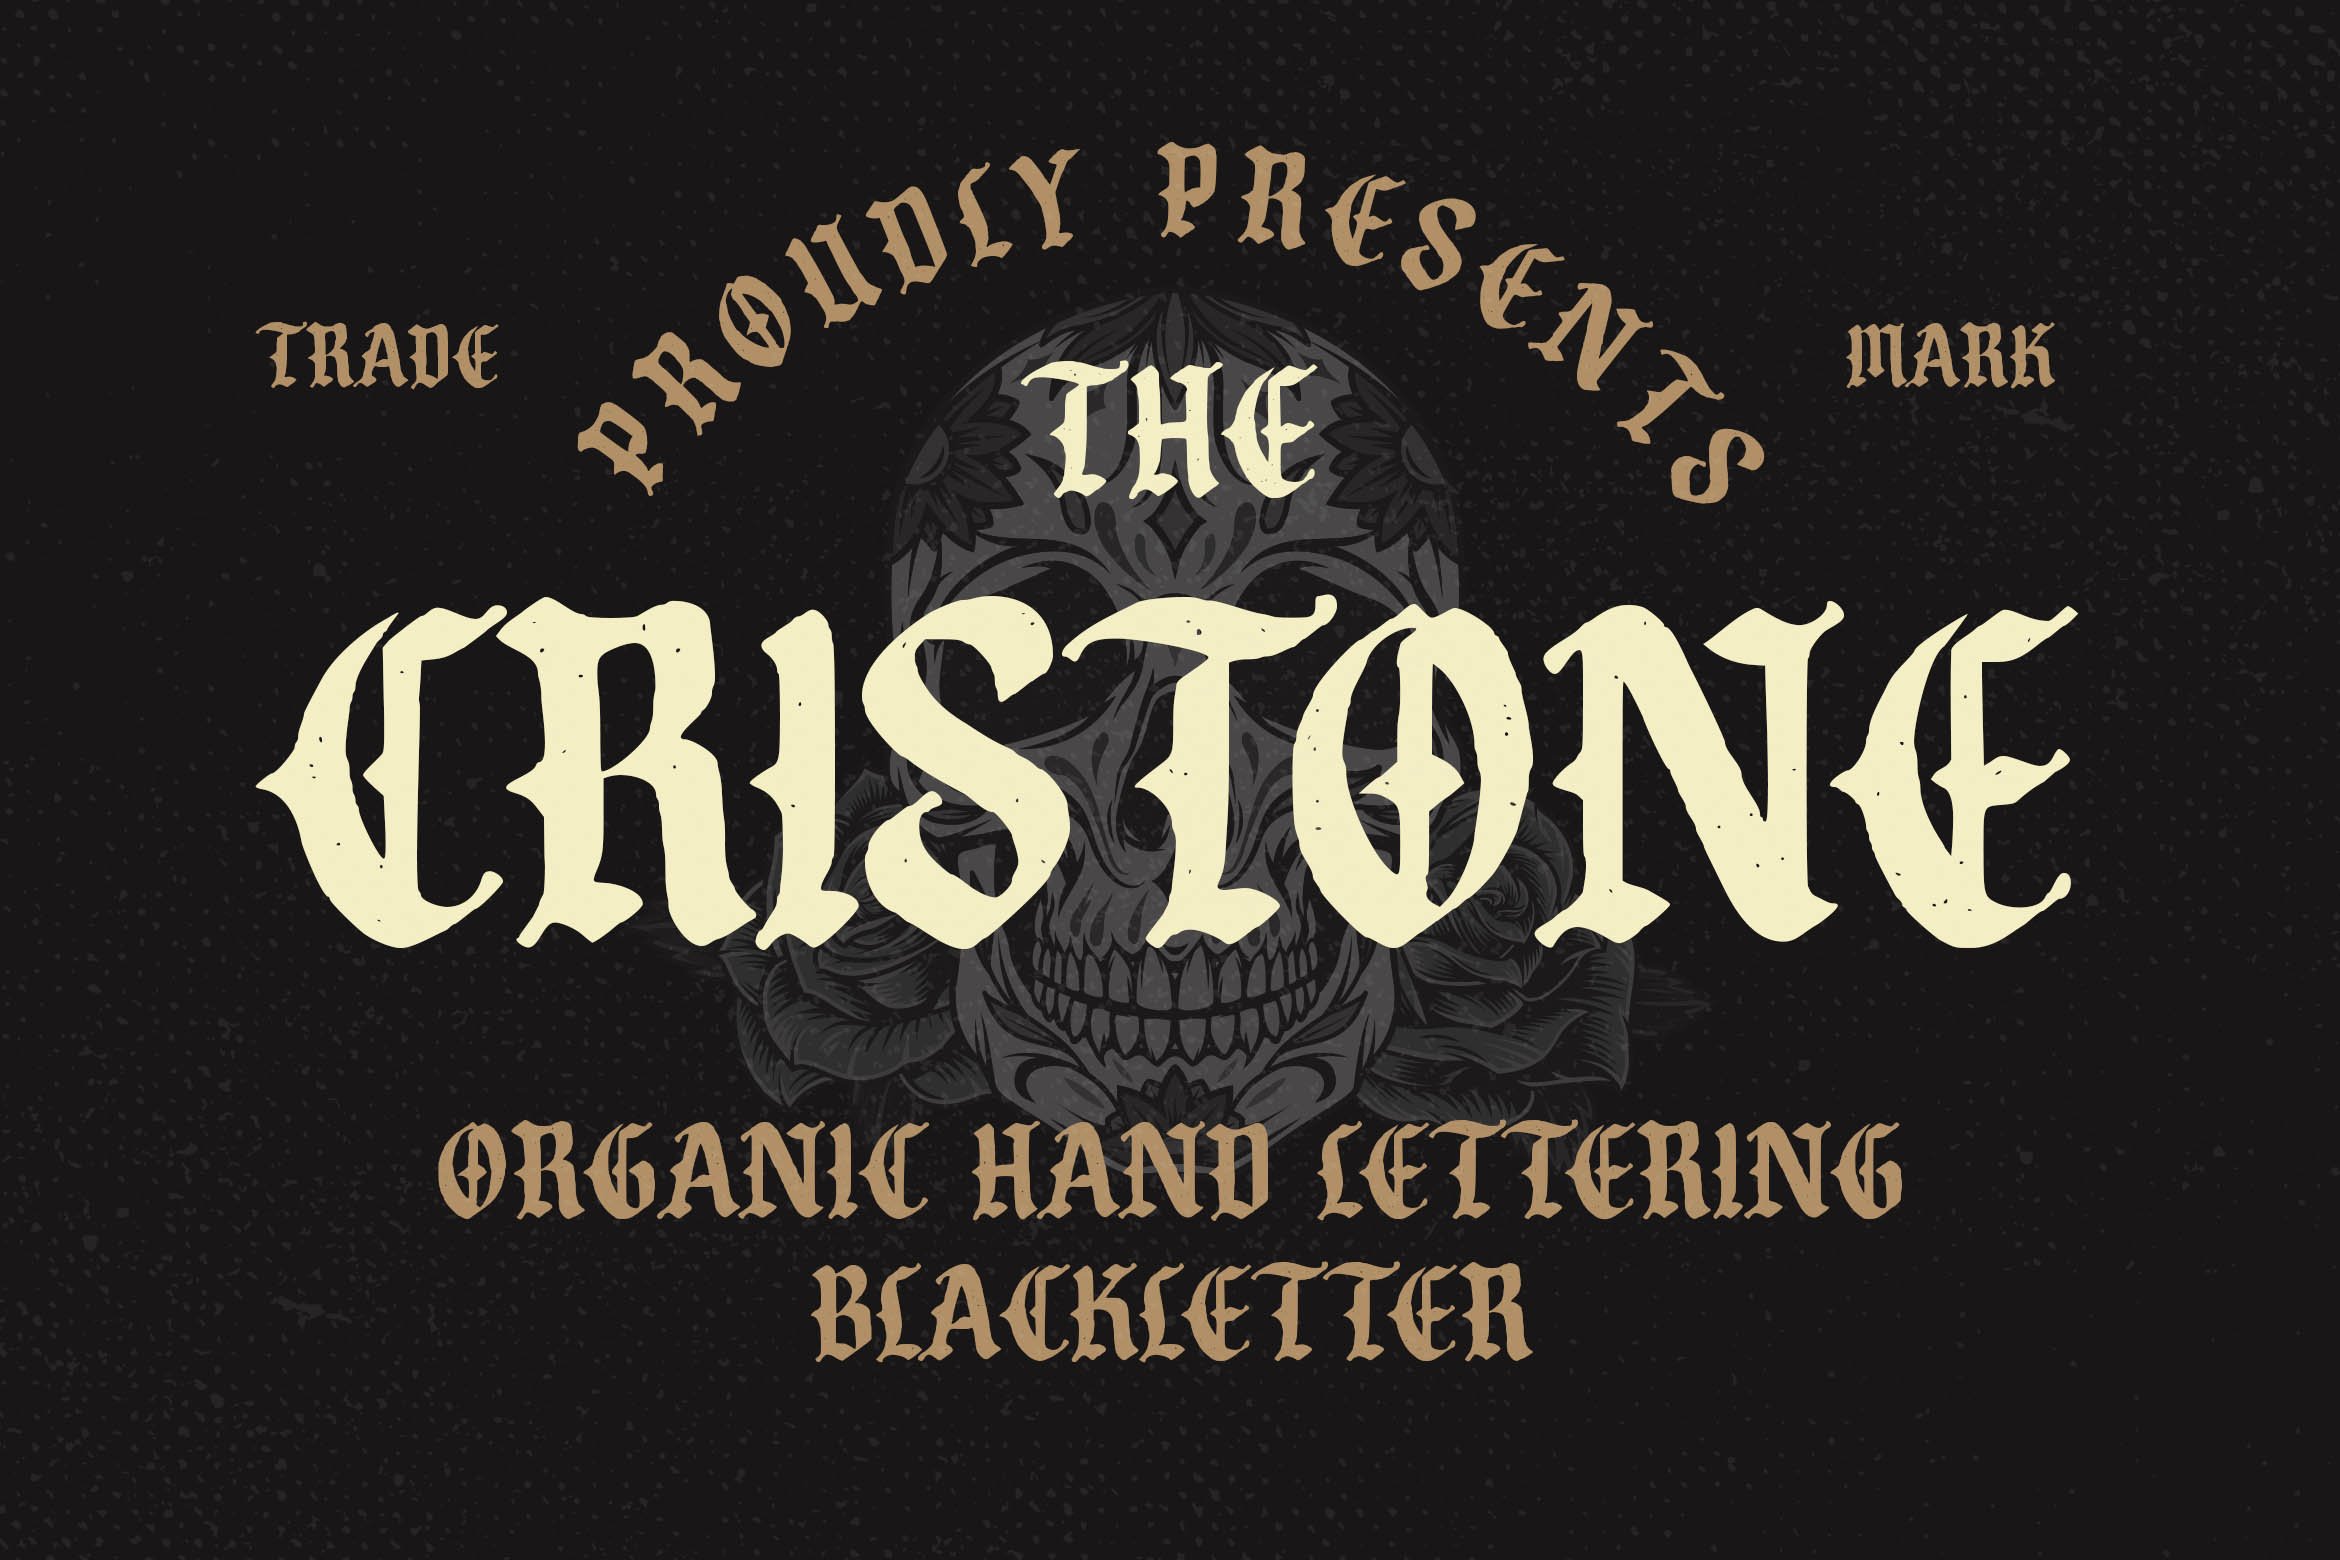 Cristone Blackletter Font cover image.